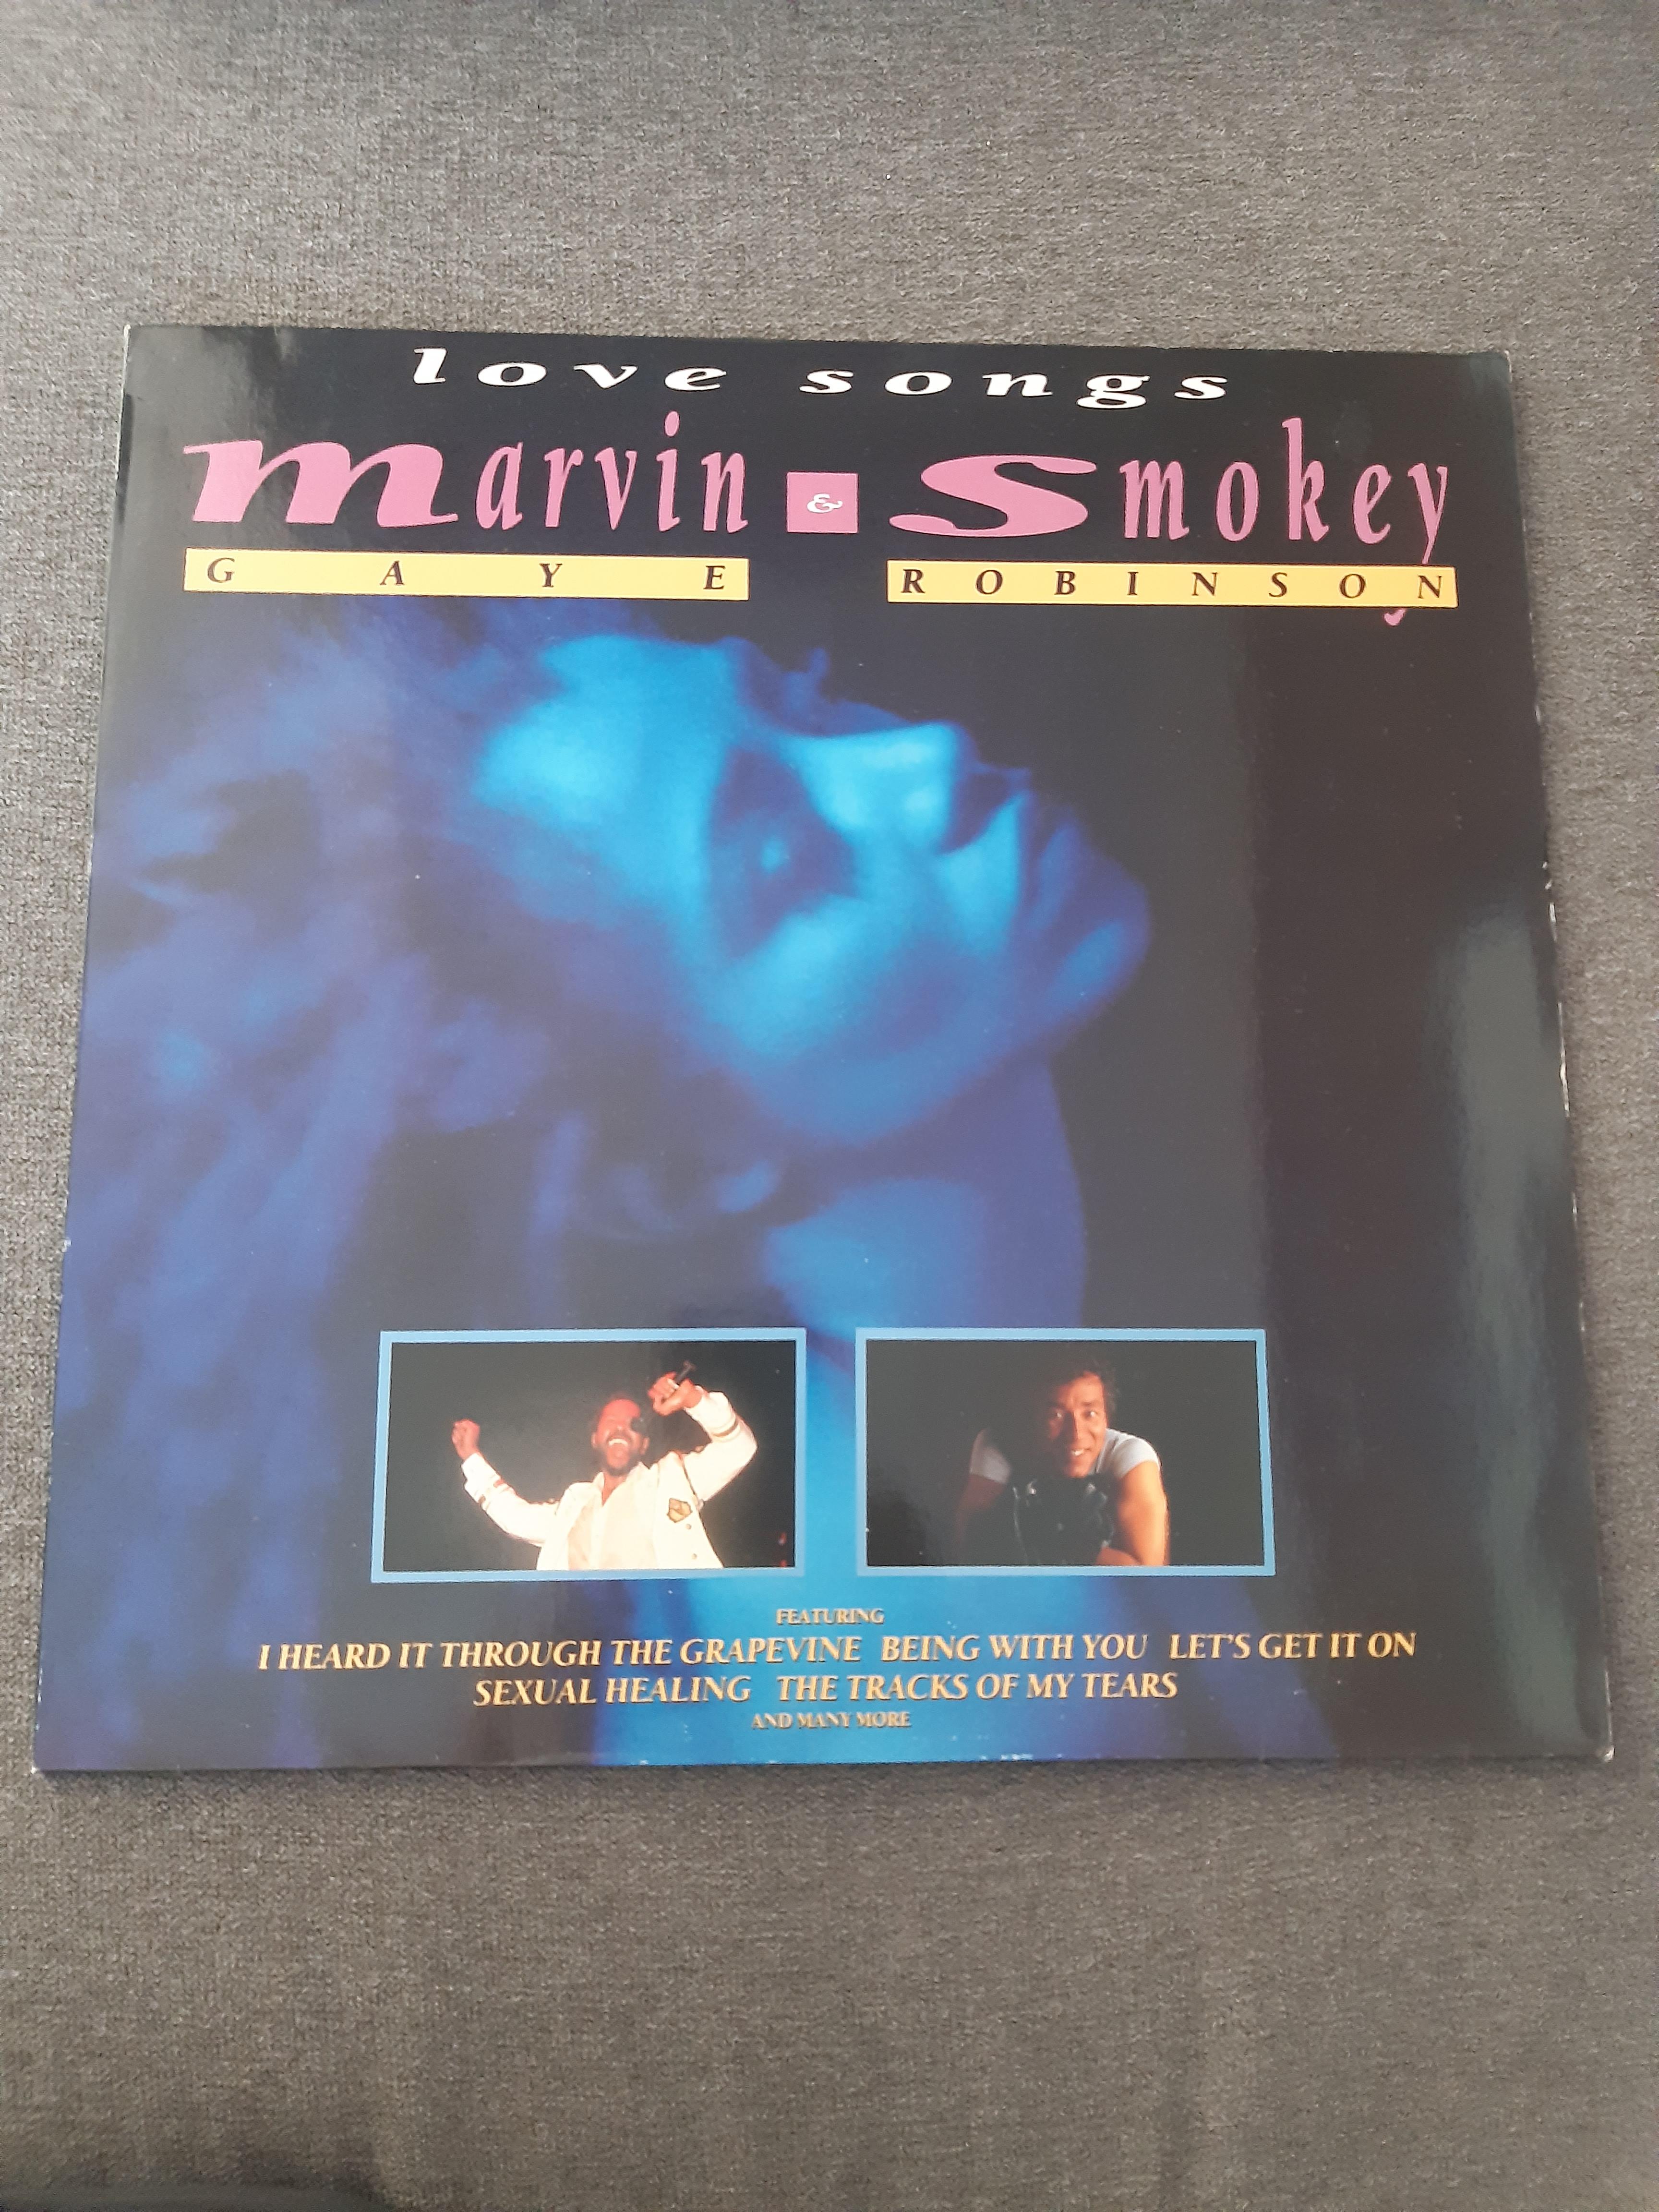 Marvin Gaye & Smokey Robinson - Love Songs - LP (käytetty)